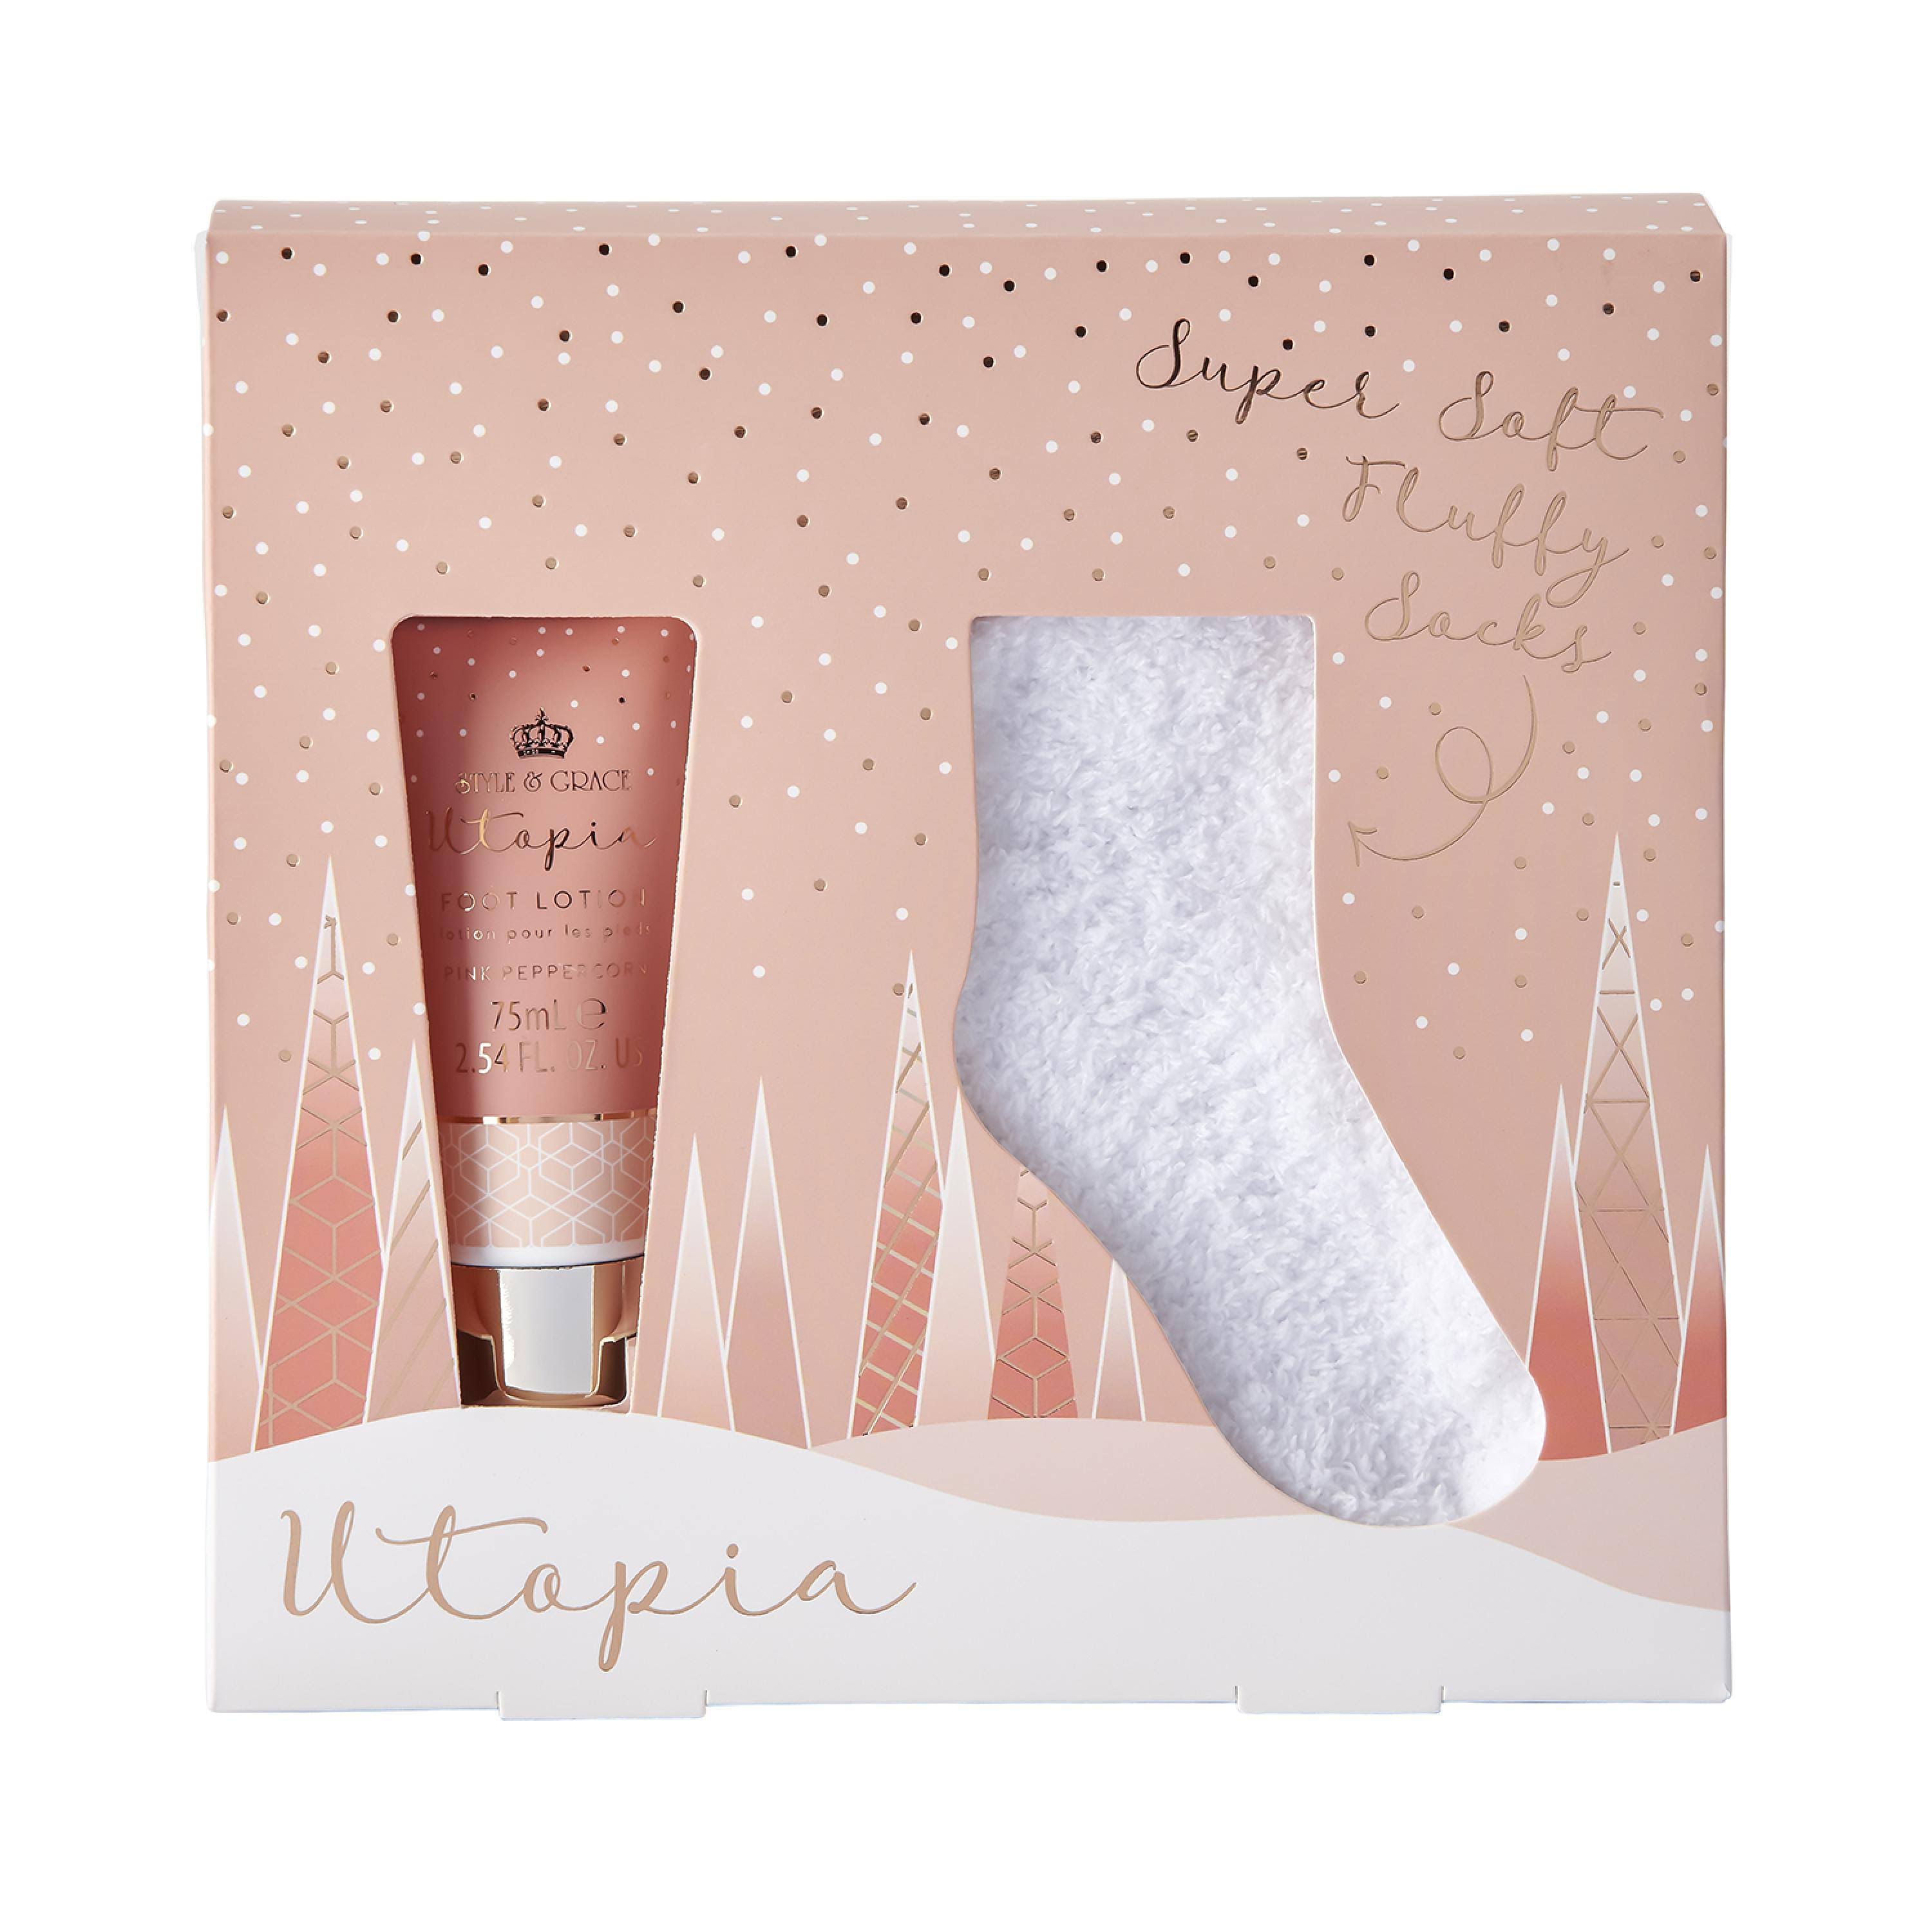 Style & Grace Utopia Sock Gift Set Eco Packaging 75ml Foot Lotion + 1 Pair Socks